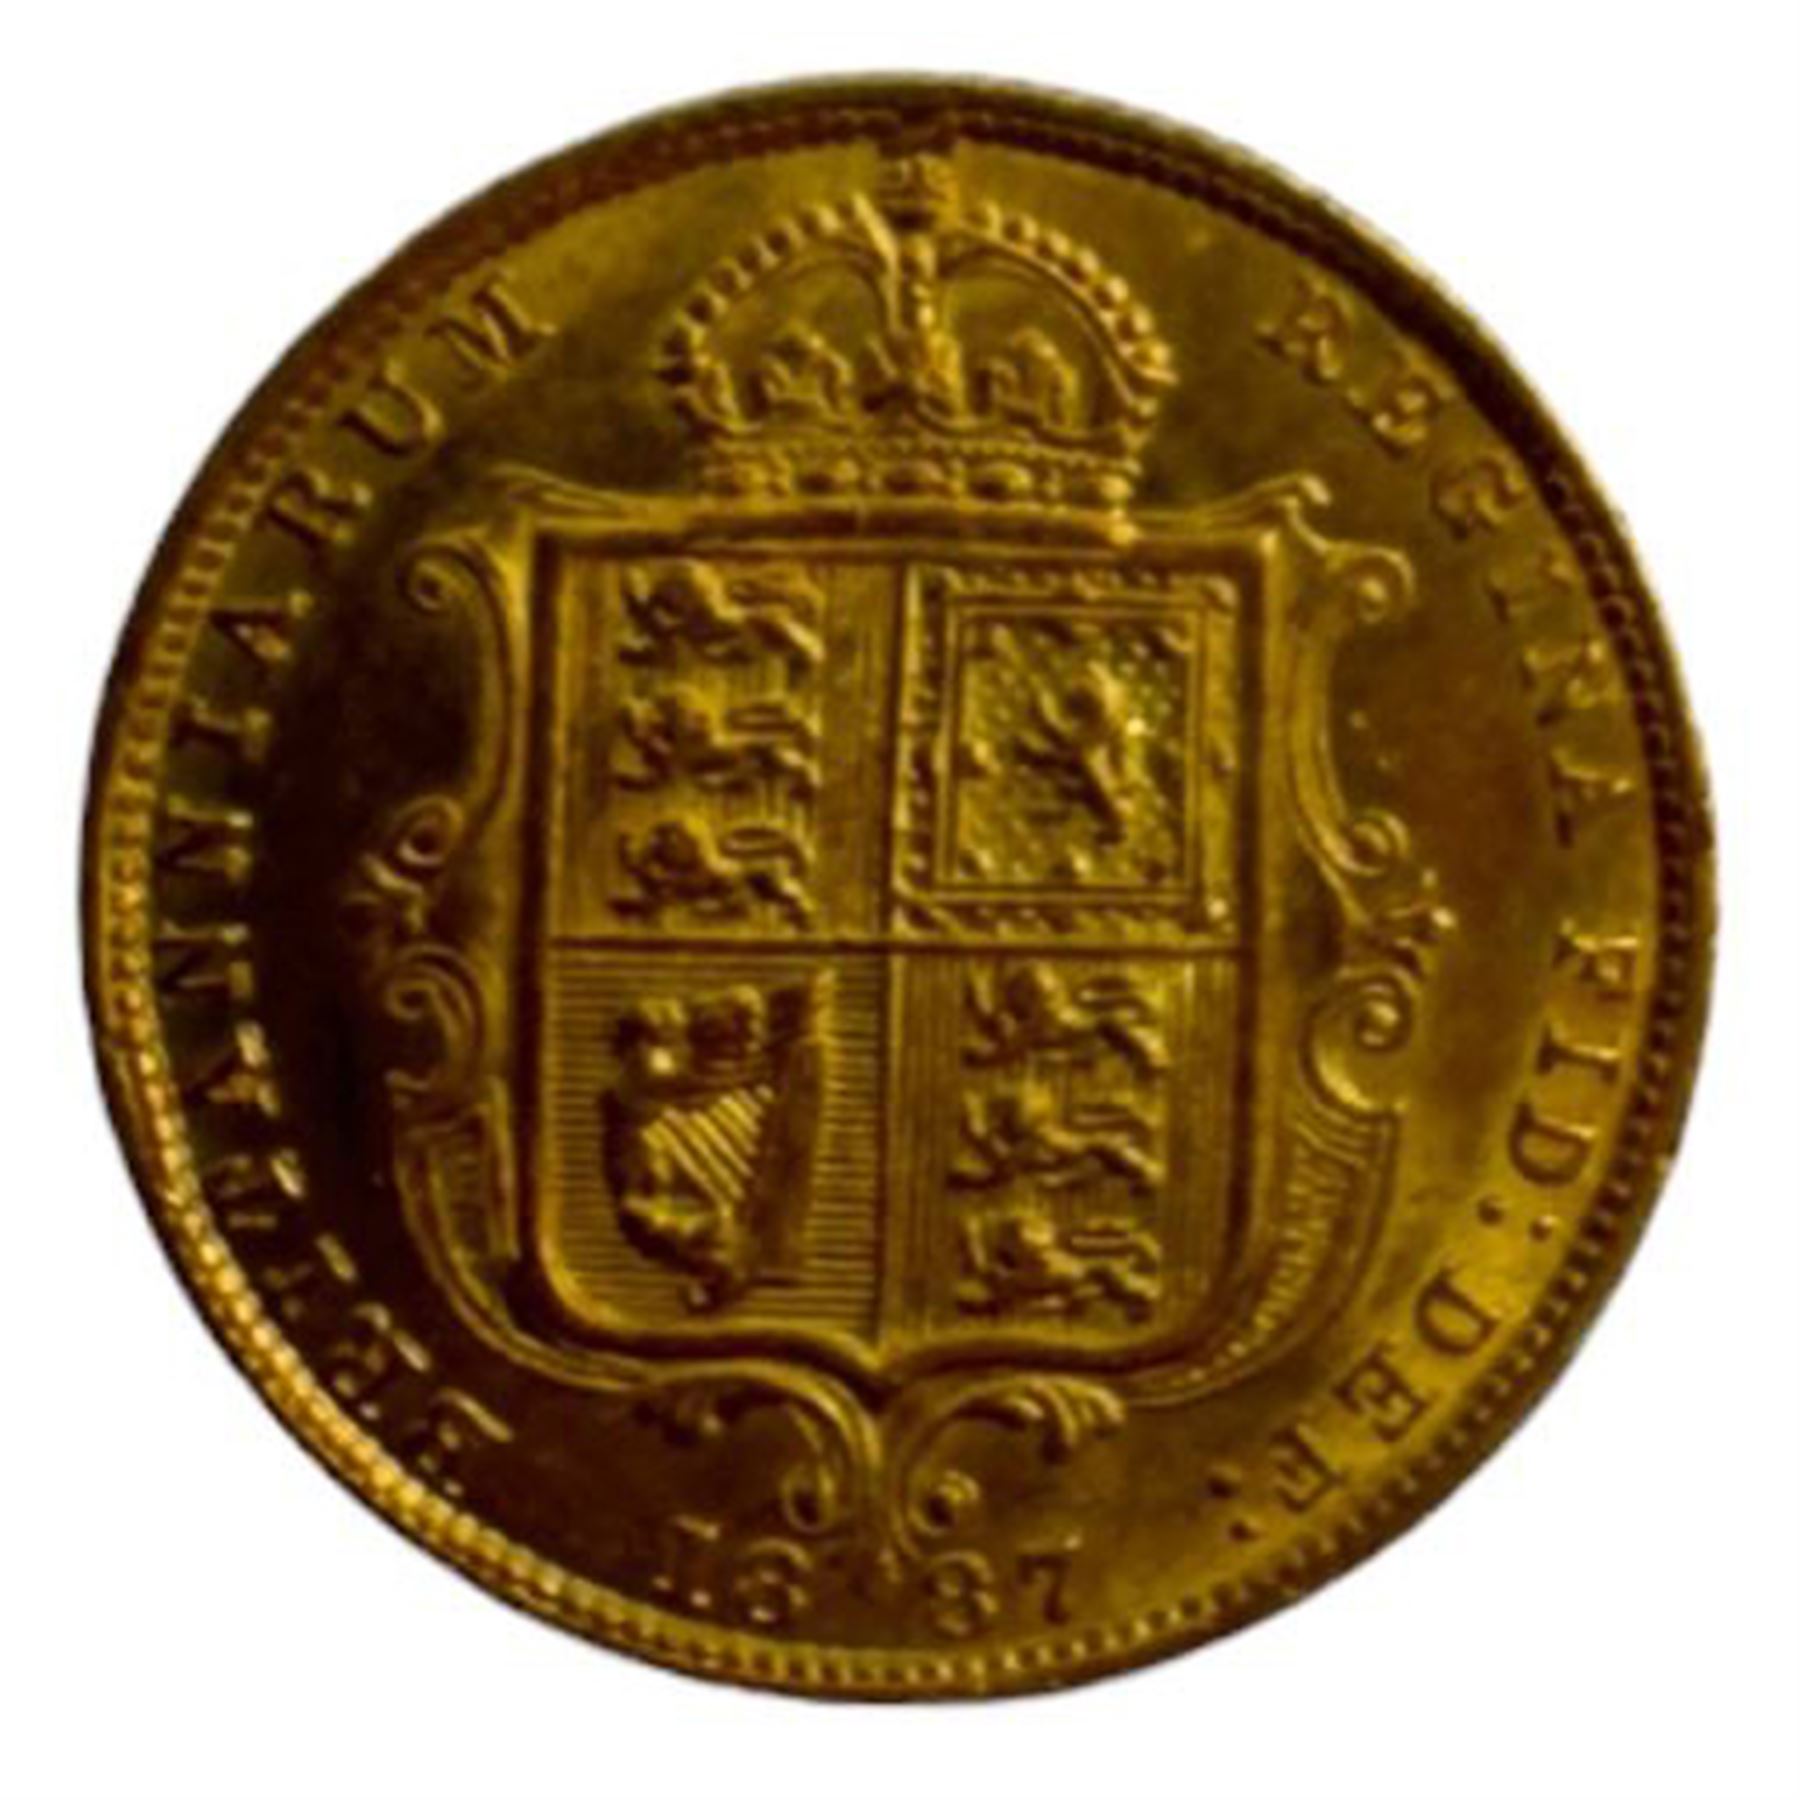 Queen Victoria 1887 gold half sovereign coin - Image 2 of 2